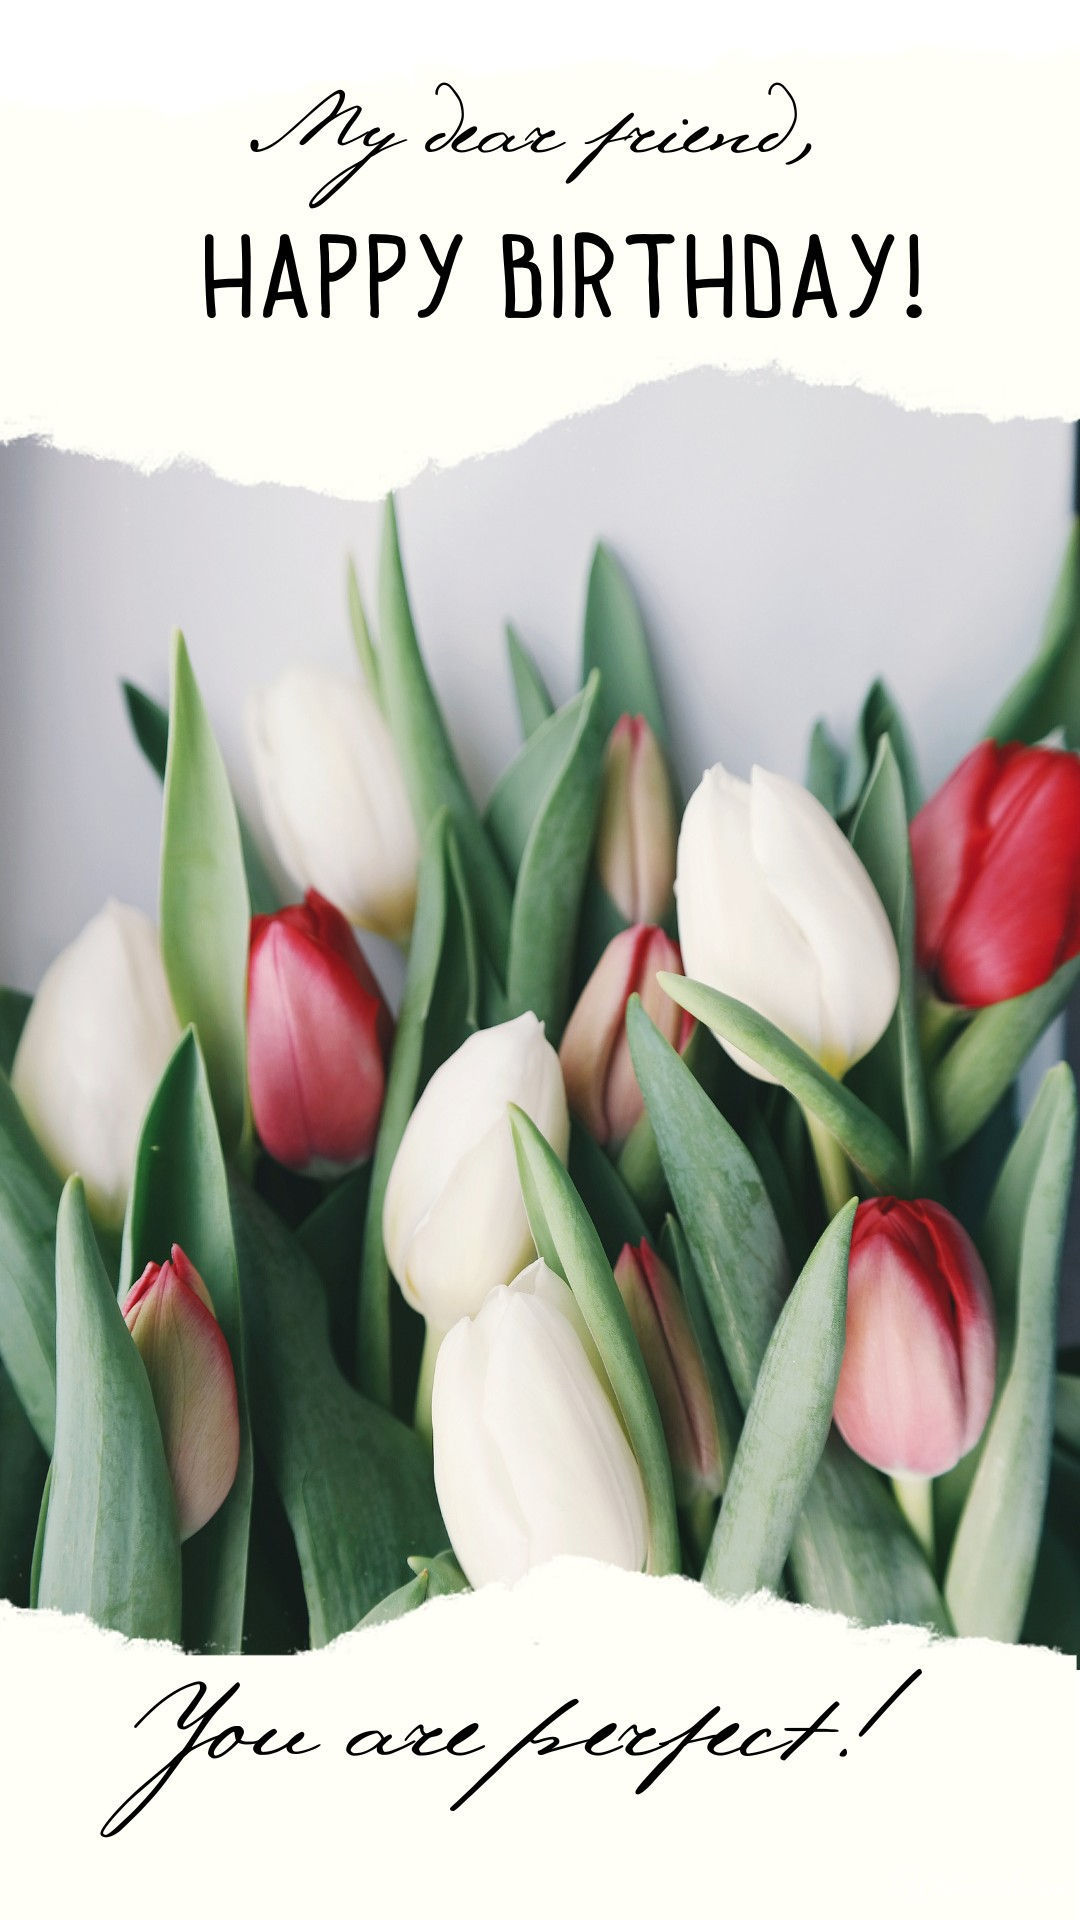 Birthday Image with Tulips